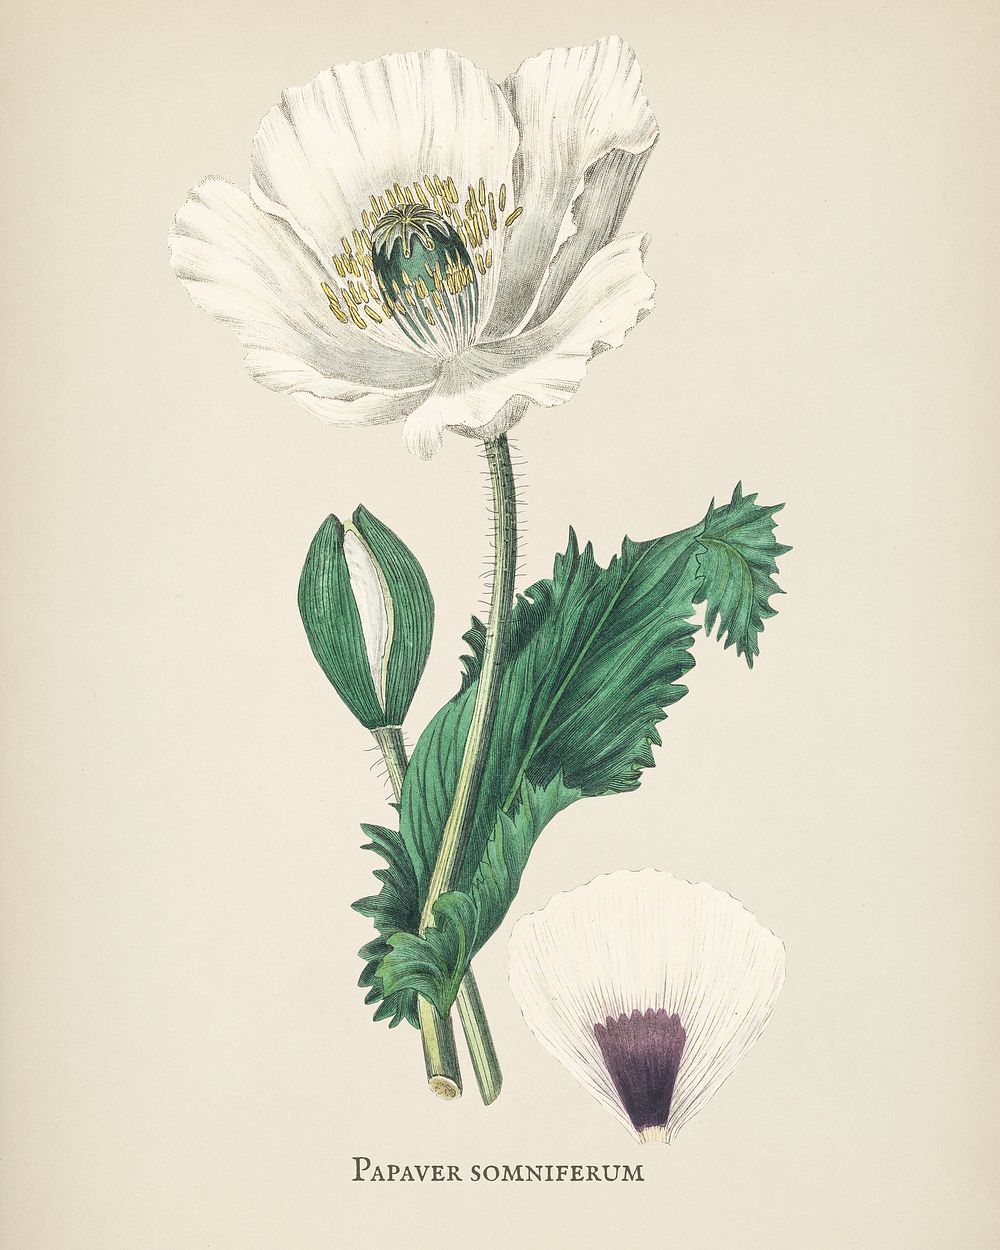 Opium poppy (Papaver somniferum) illustration from Medical Botany (1836) by John Stephenson and James Morss Churchill.